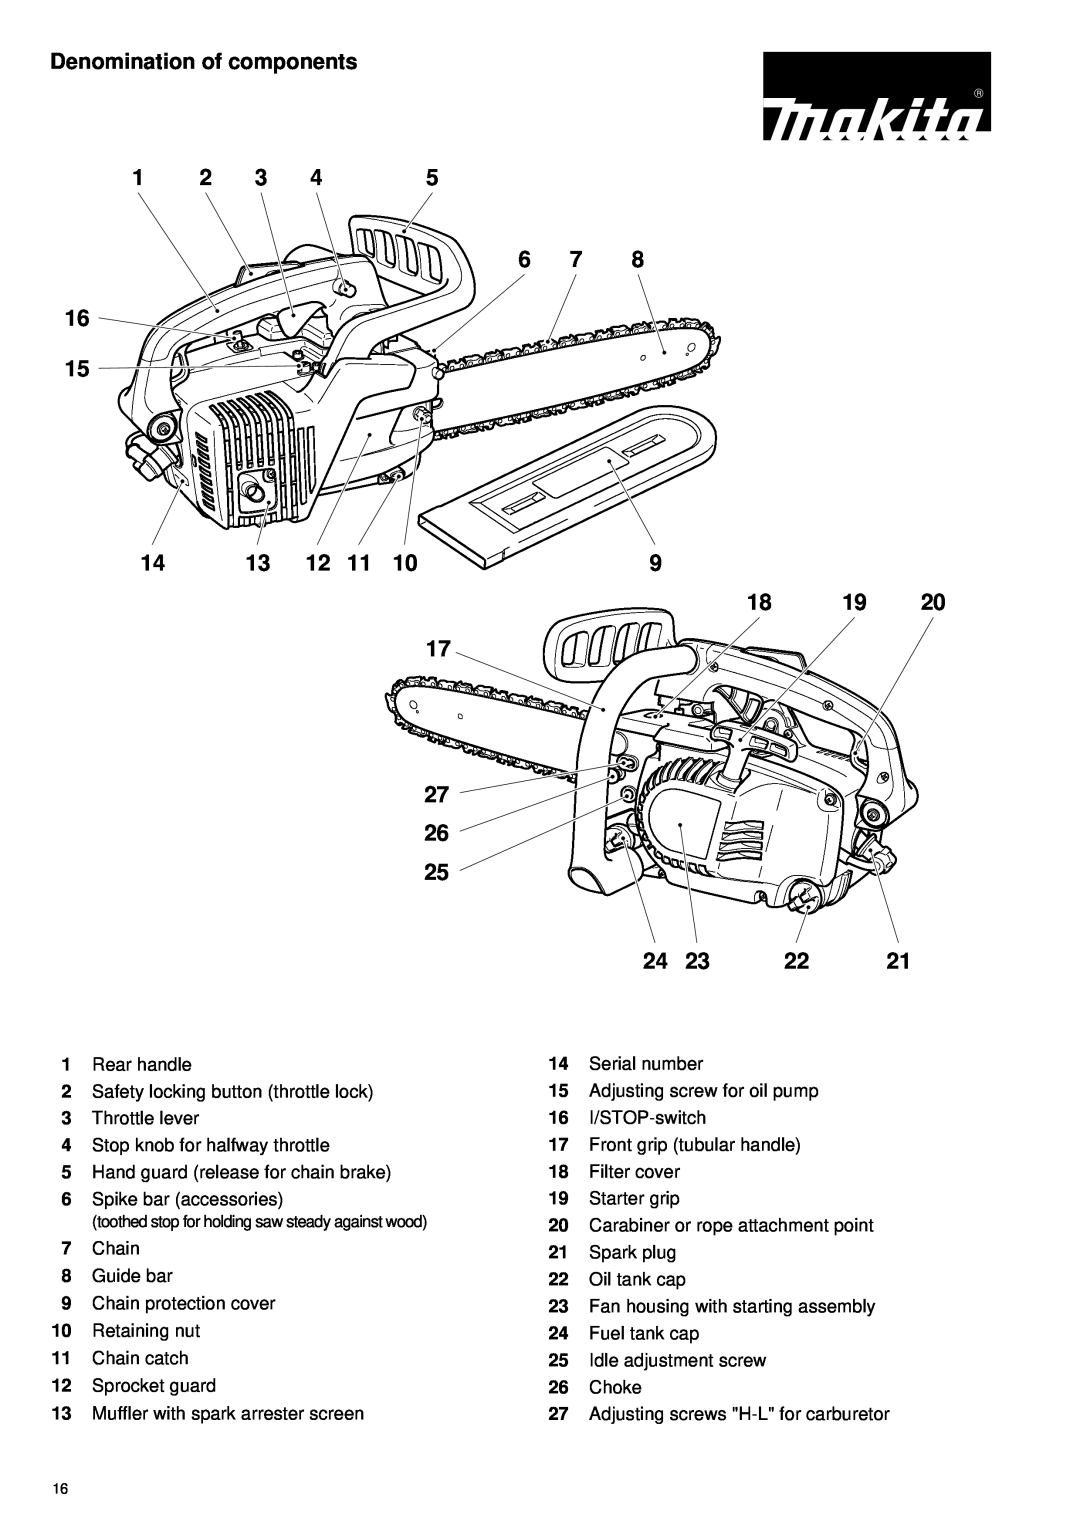 Makita DCS 330 TH instruction manual 6 7 16 15, 17 27 26 25, Denomination of components 